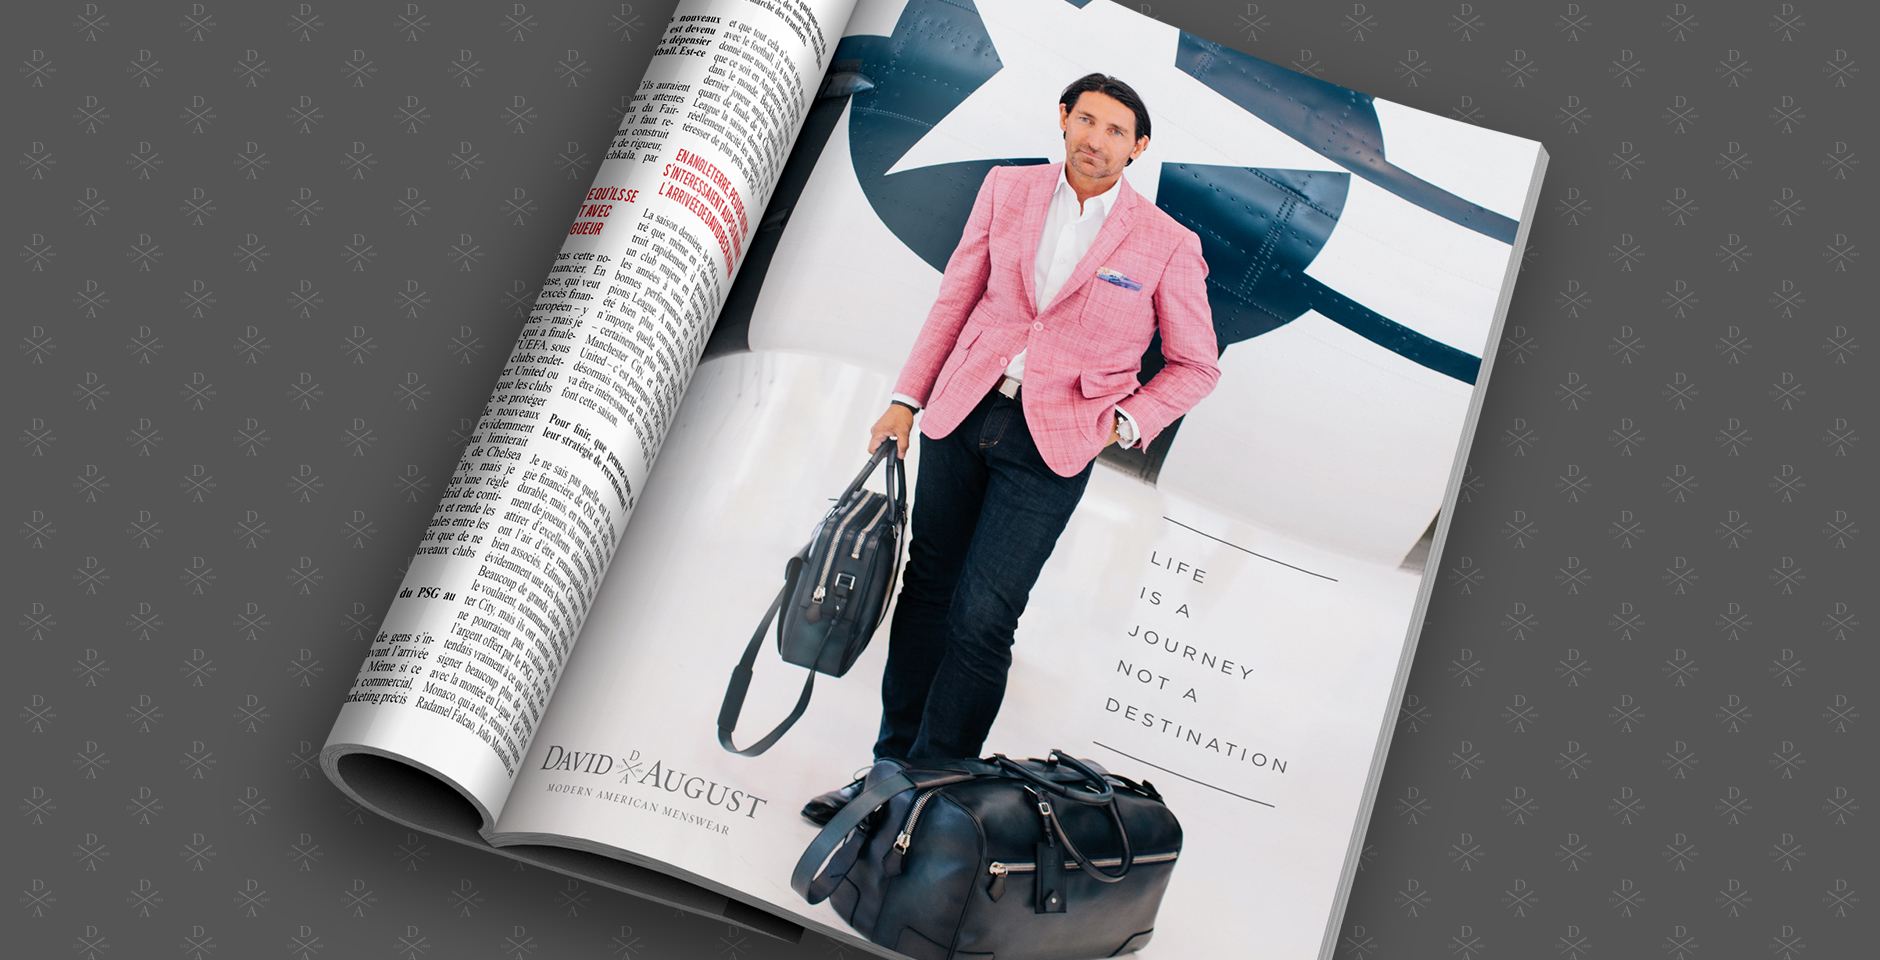 david august print ad magazine campaign lyon air museum pink jacket